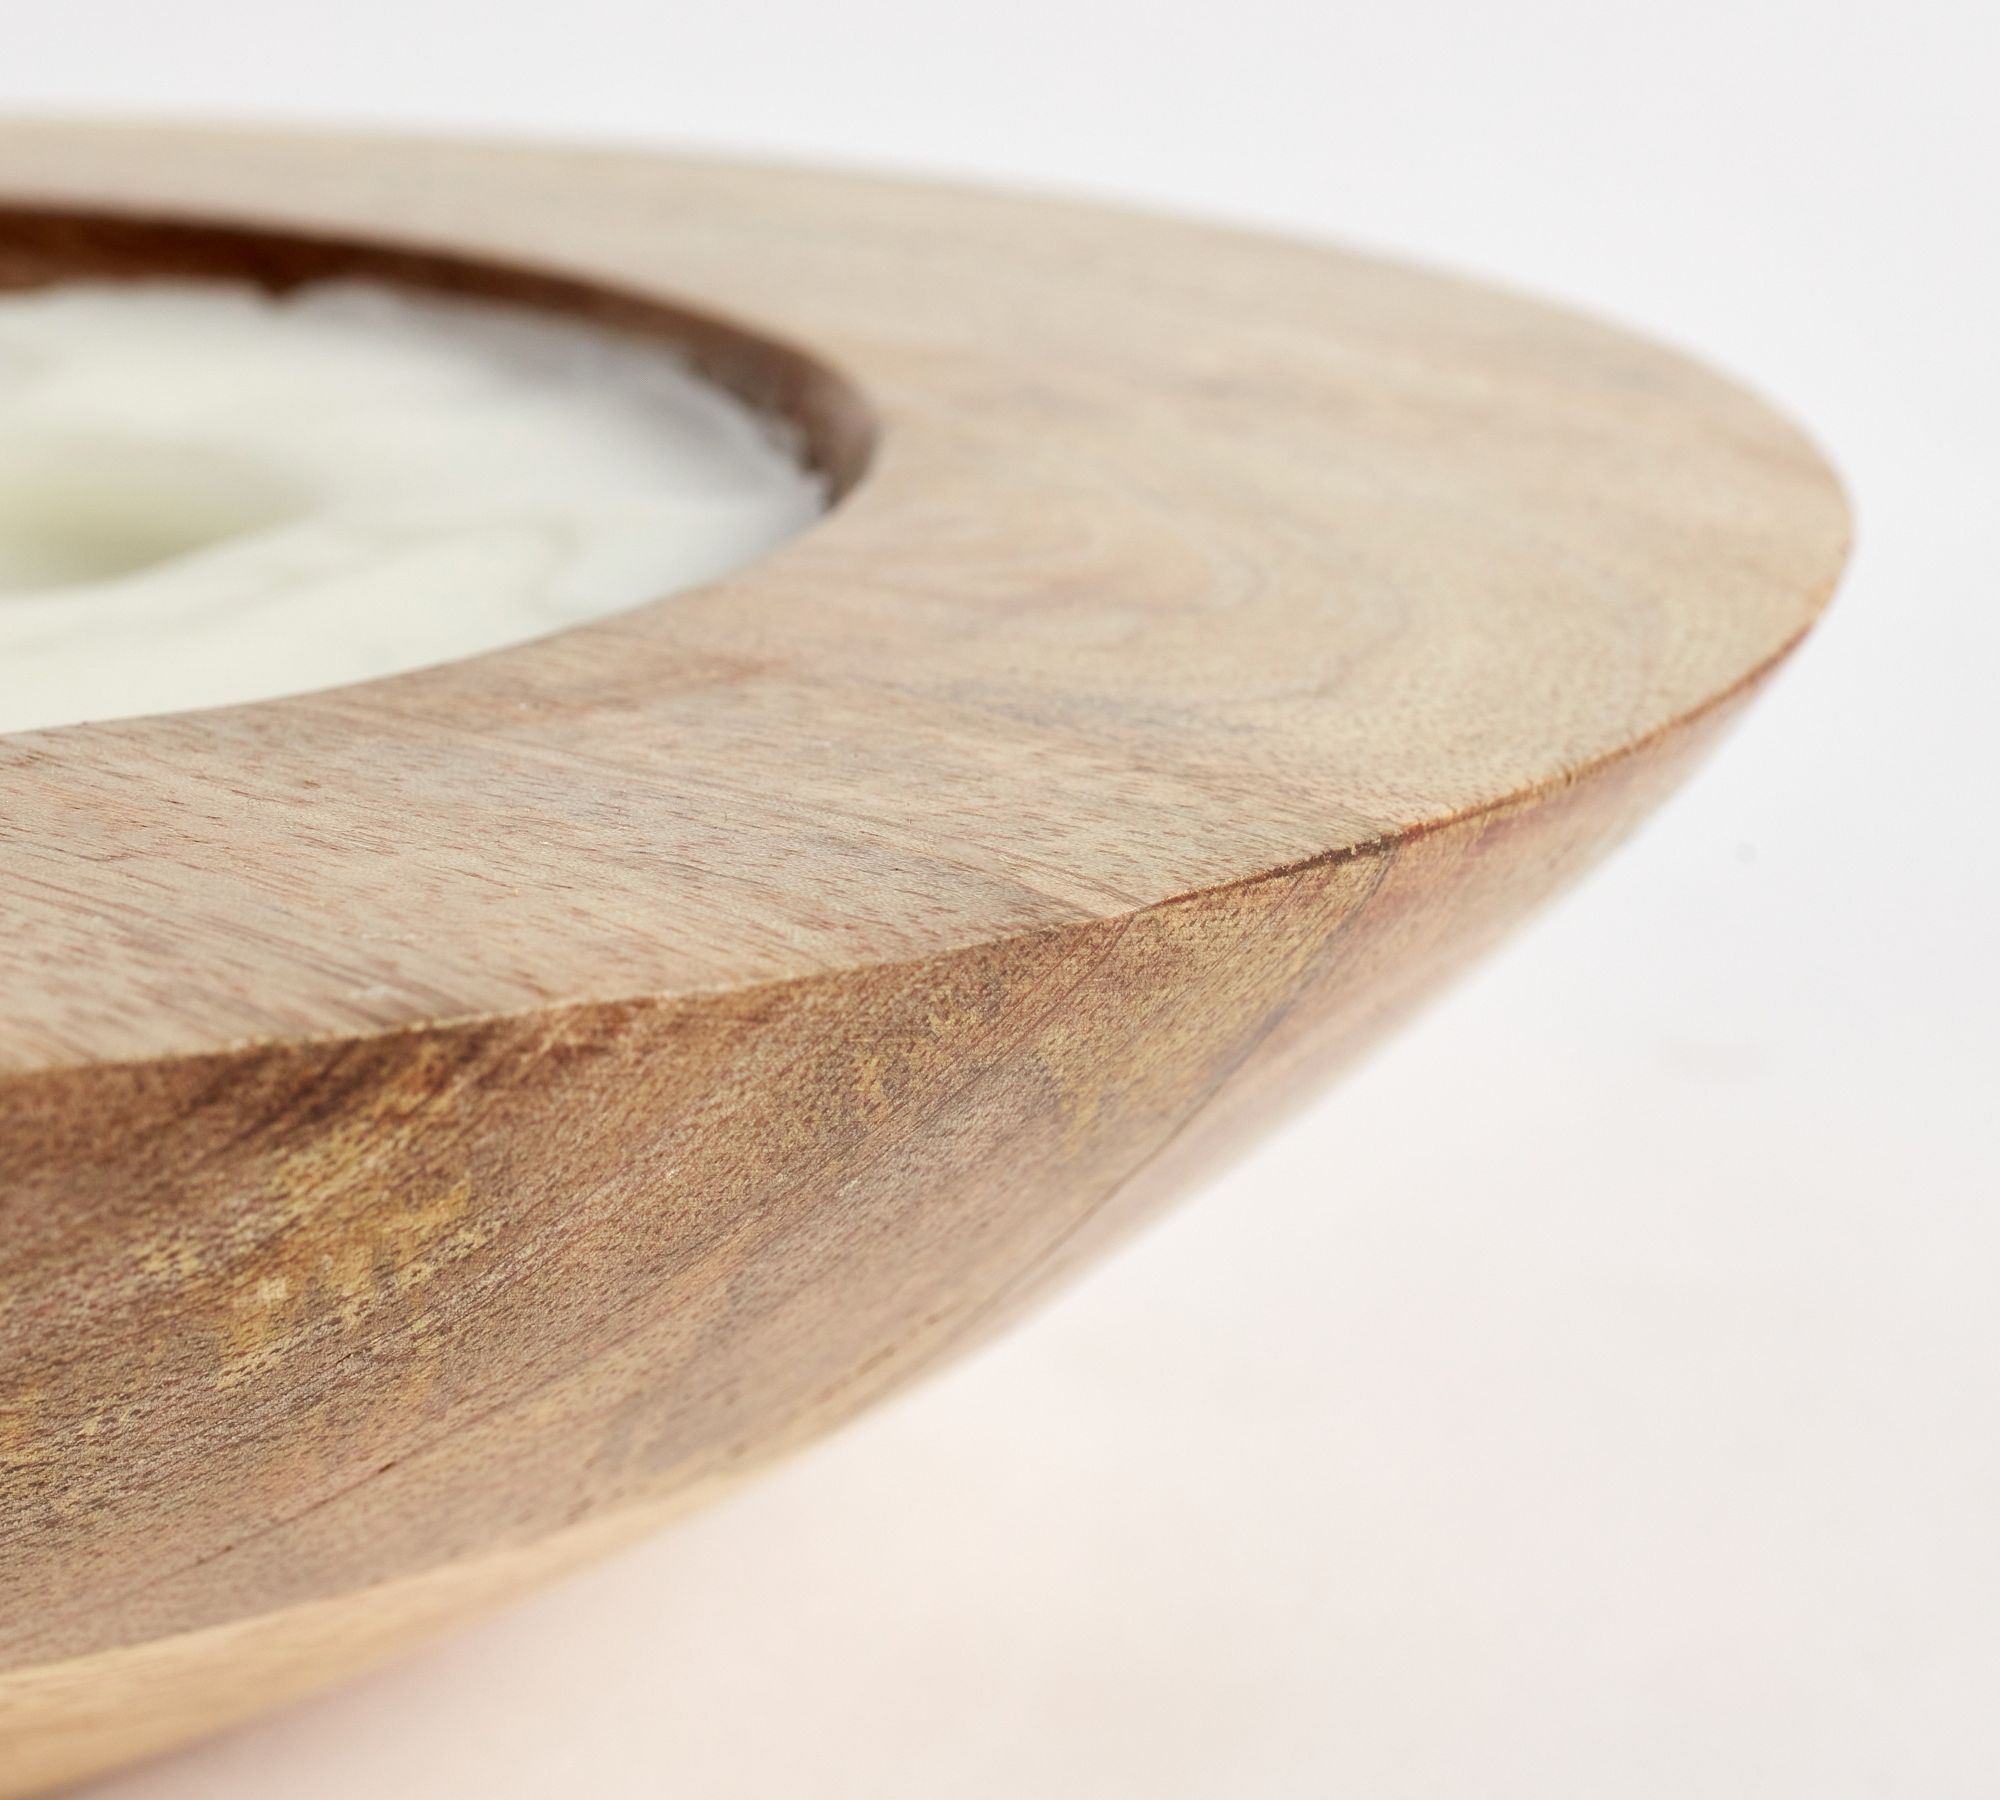 Wooden Bowl Scented Candle - Fig & Sandalwood, Brown - Image 4